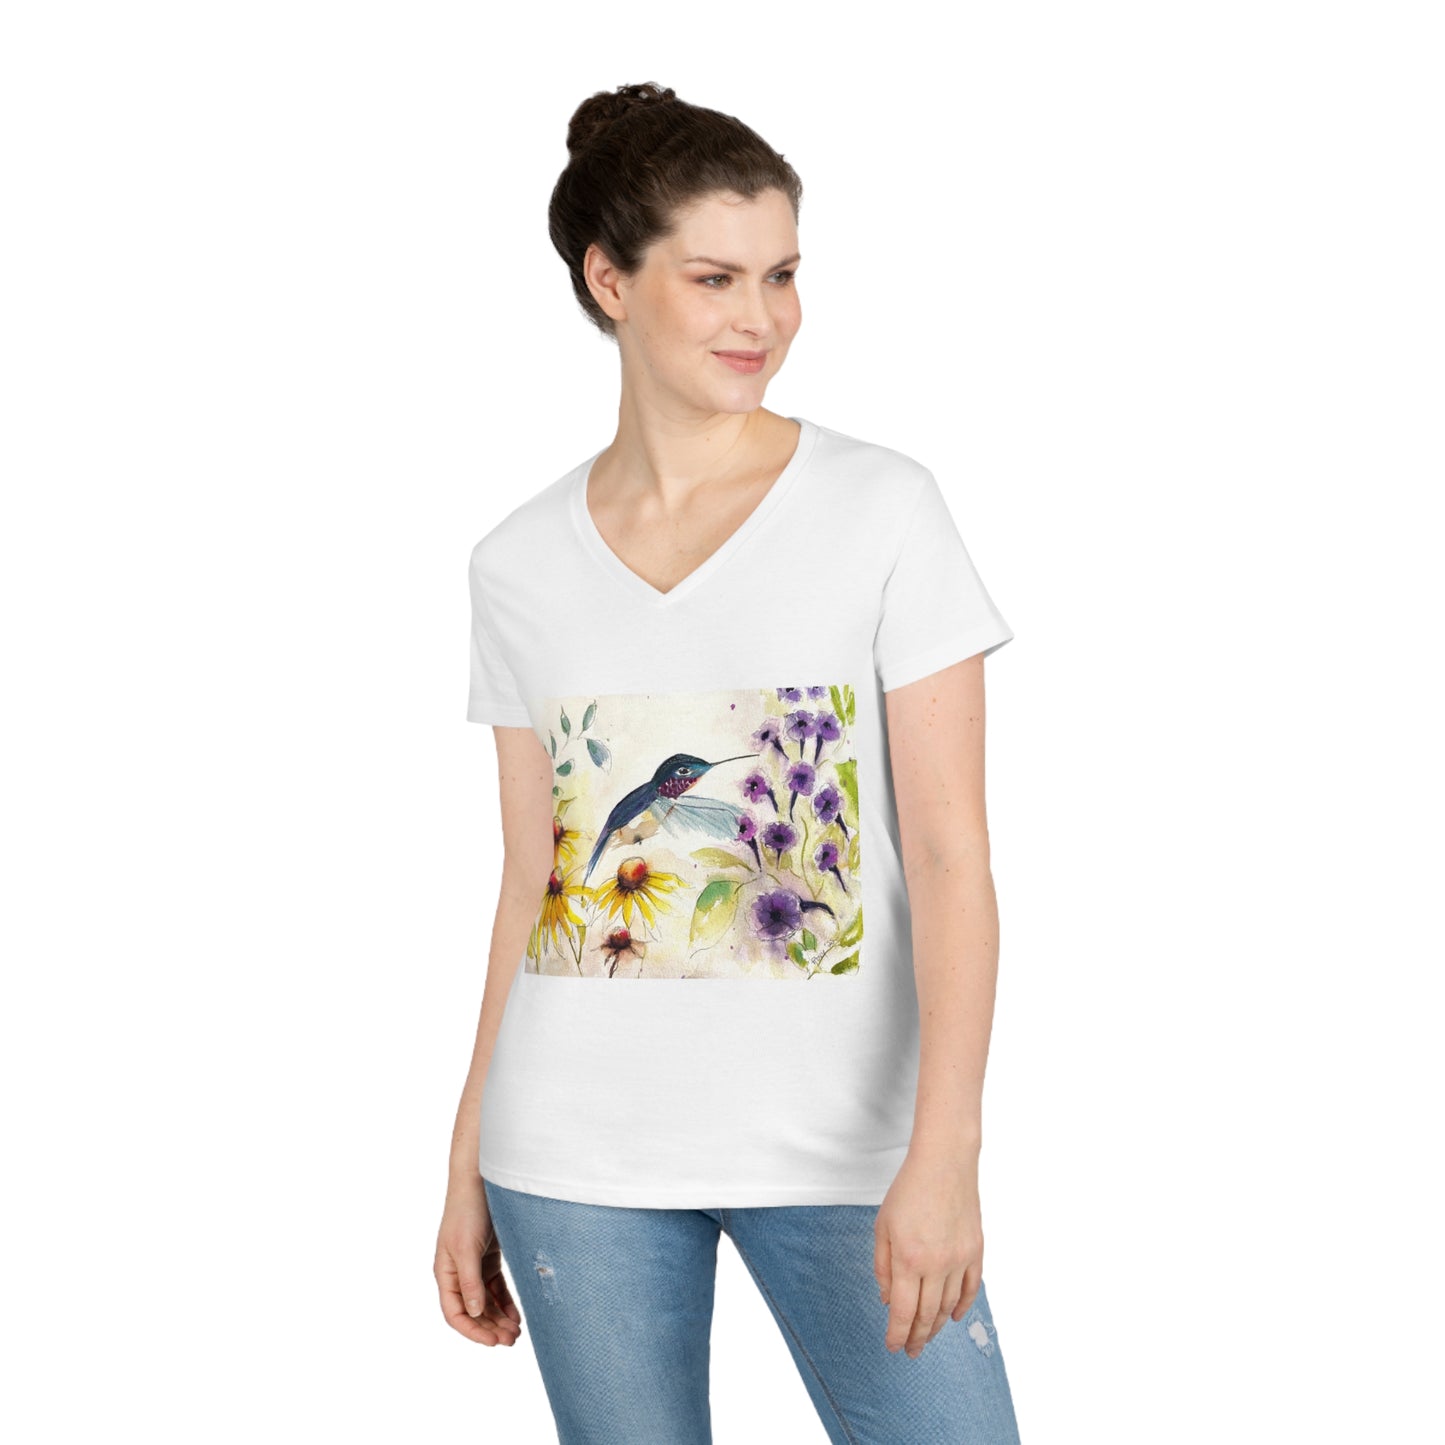 Happy Hummingbird Ladies' V-Neck T-Shirt